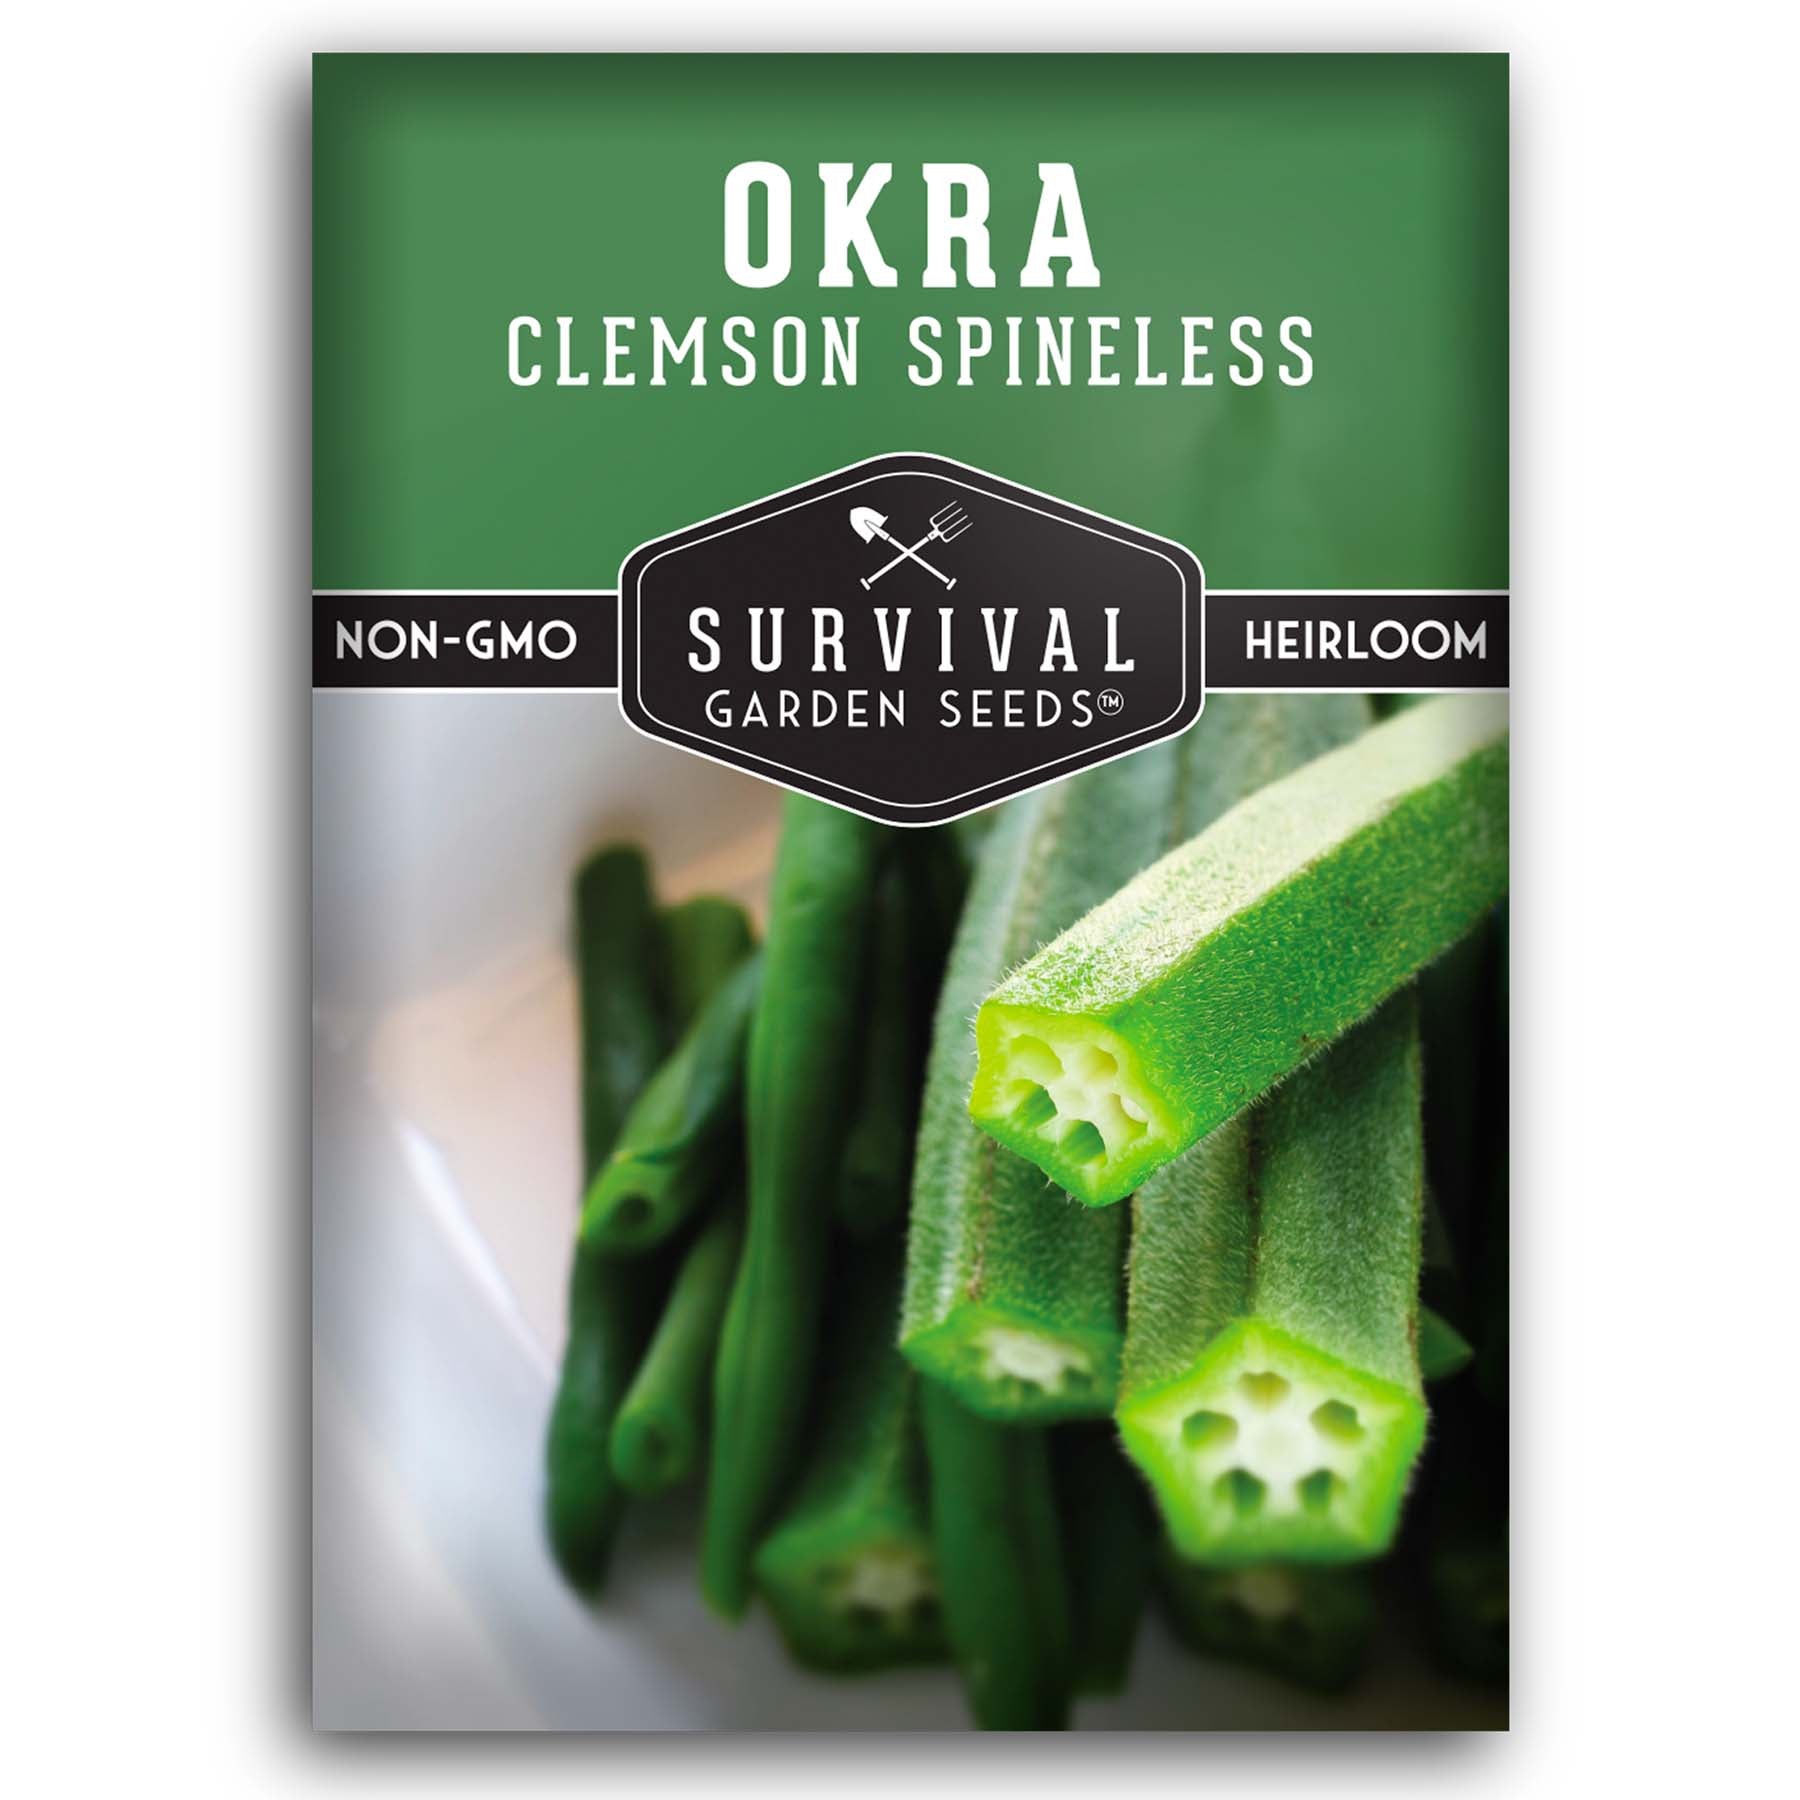 Clemson Spineless Okra Seeds for planting